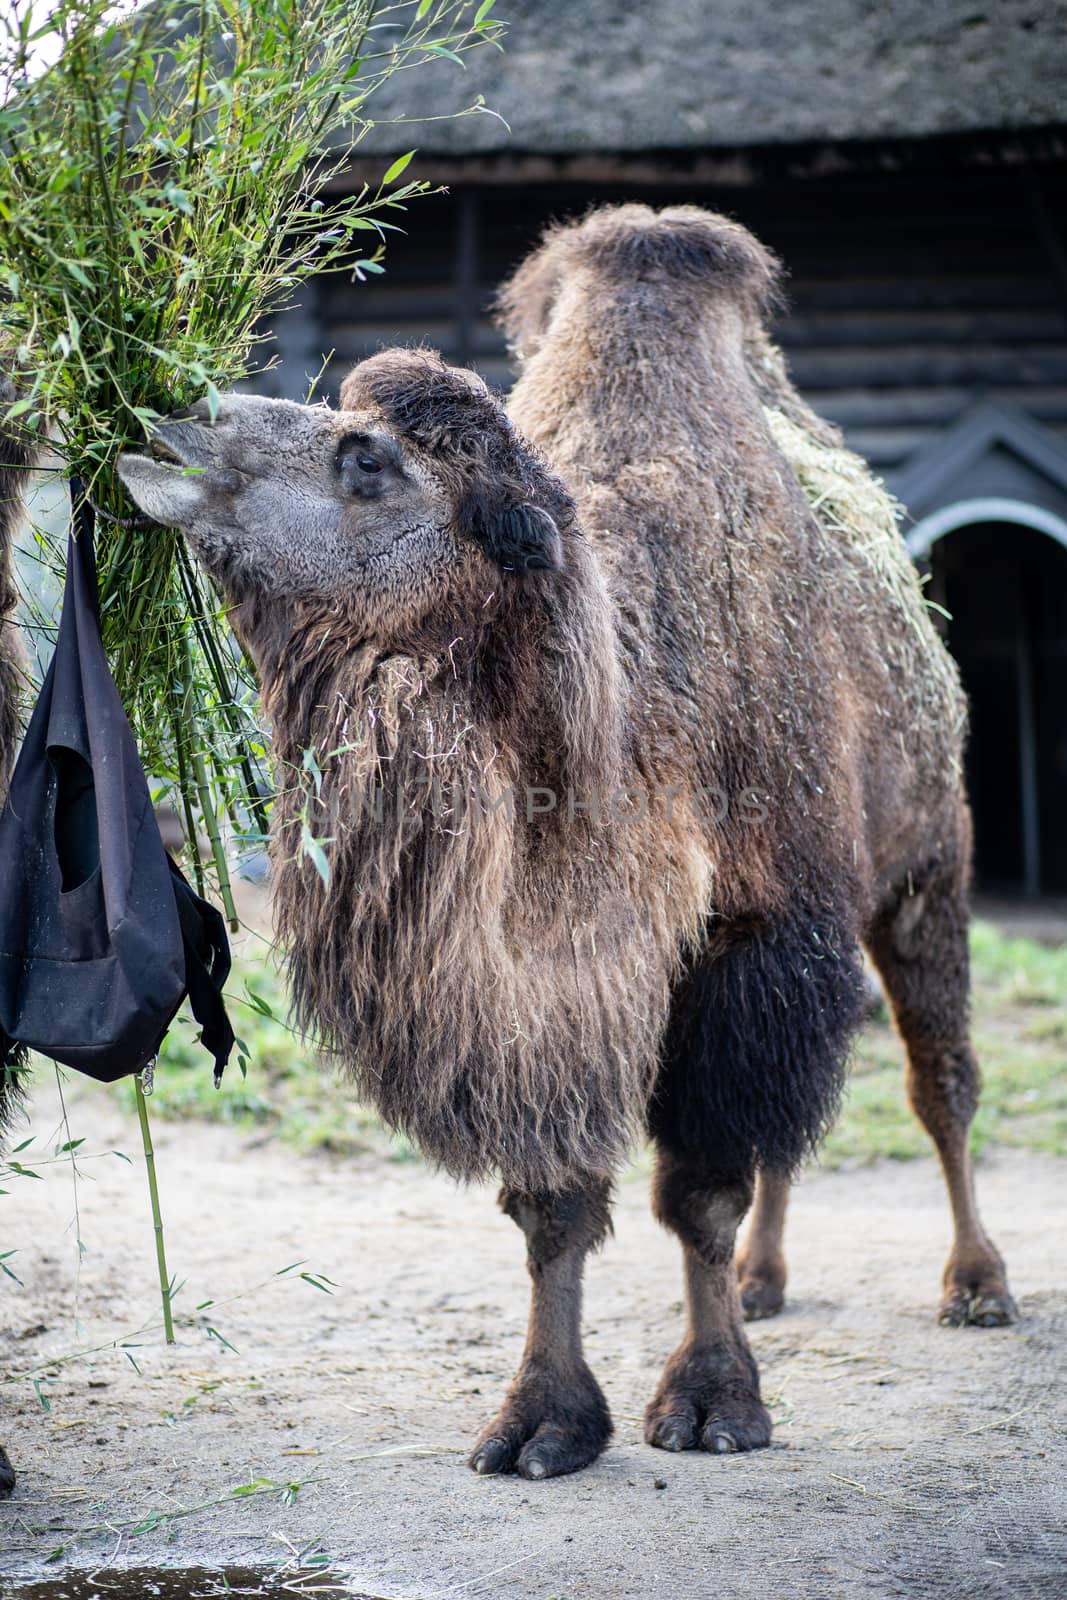 Frederiksberg, Denmark - January 04, 2020: A camel in the outdoor area in Copenhagen Zoo.